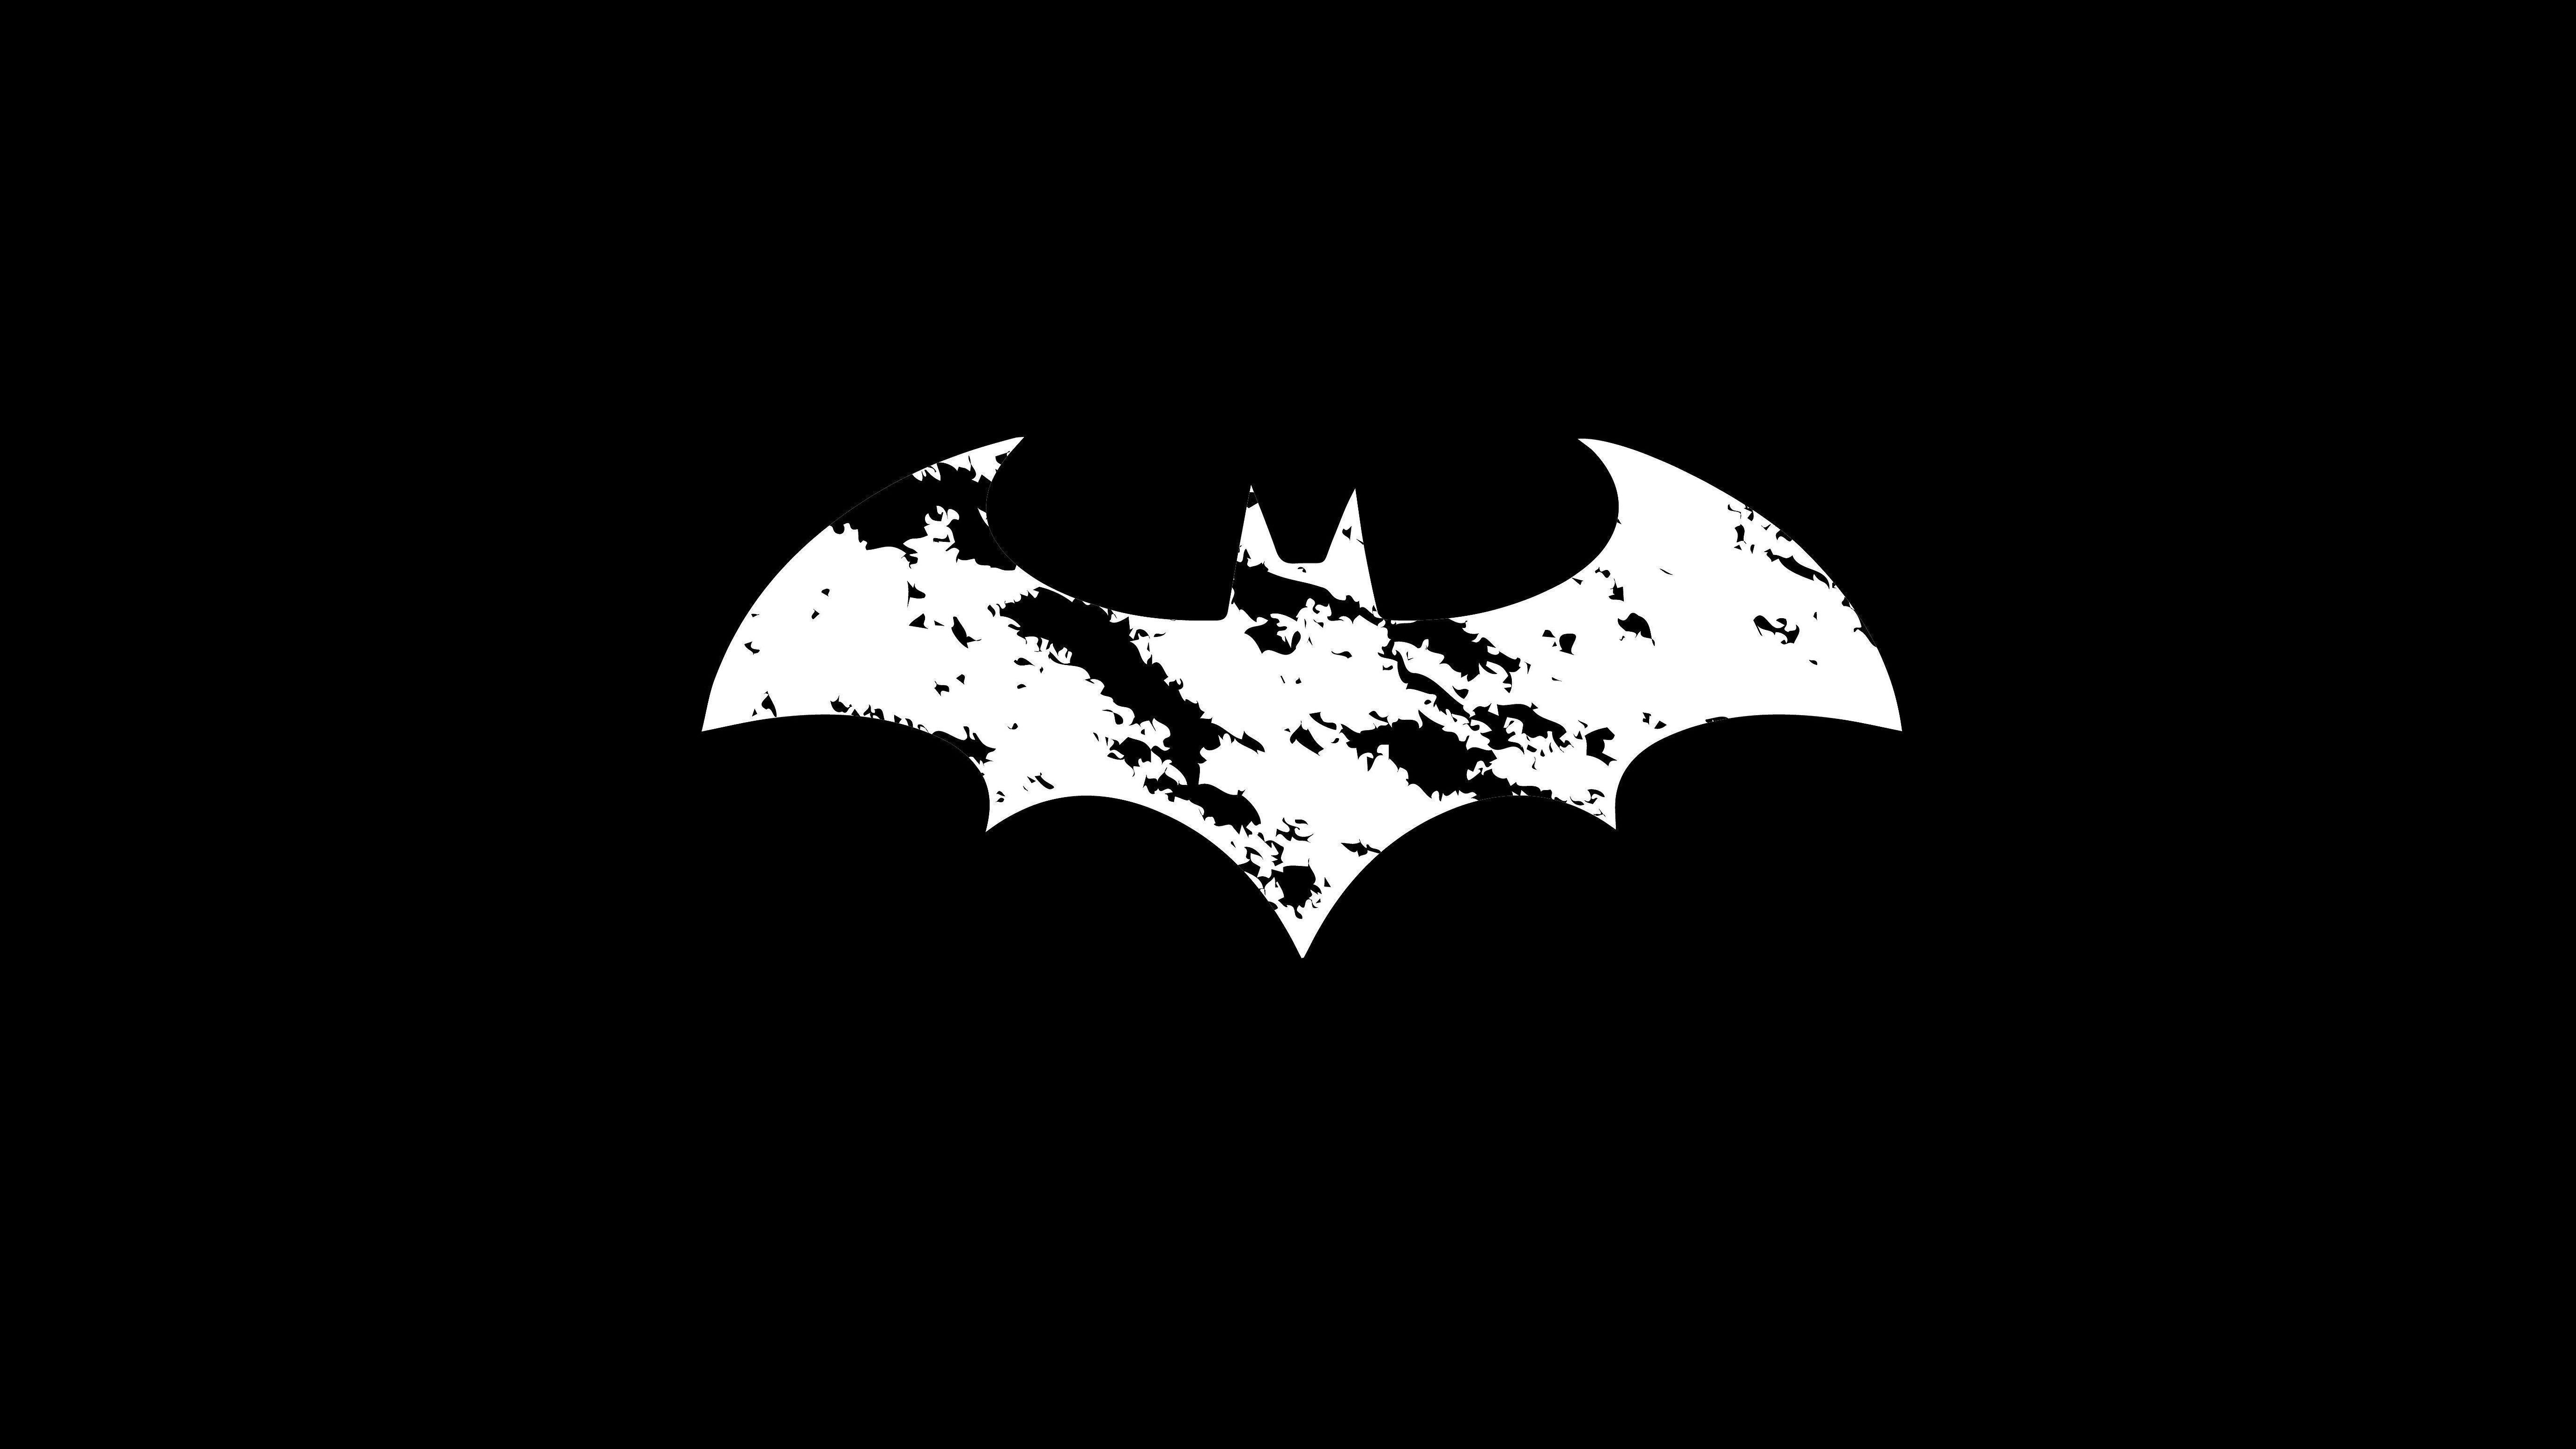 Batman Wallpapers HD 2016 download free